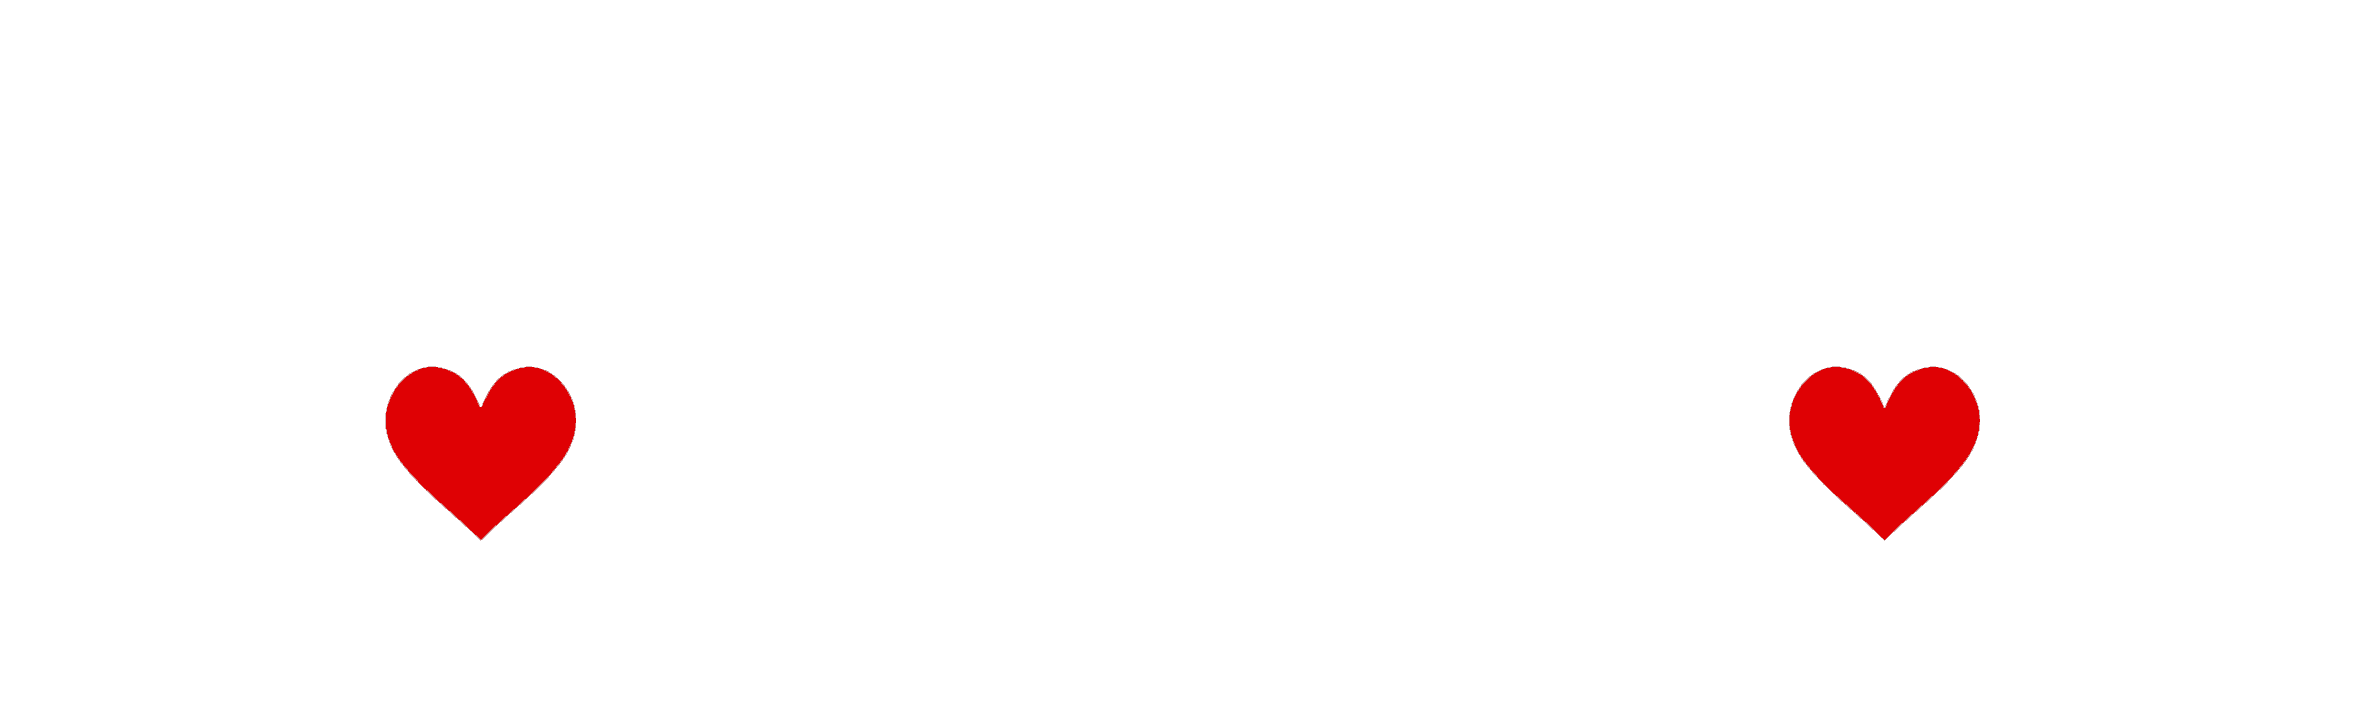 Love Connection logo